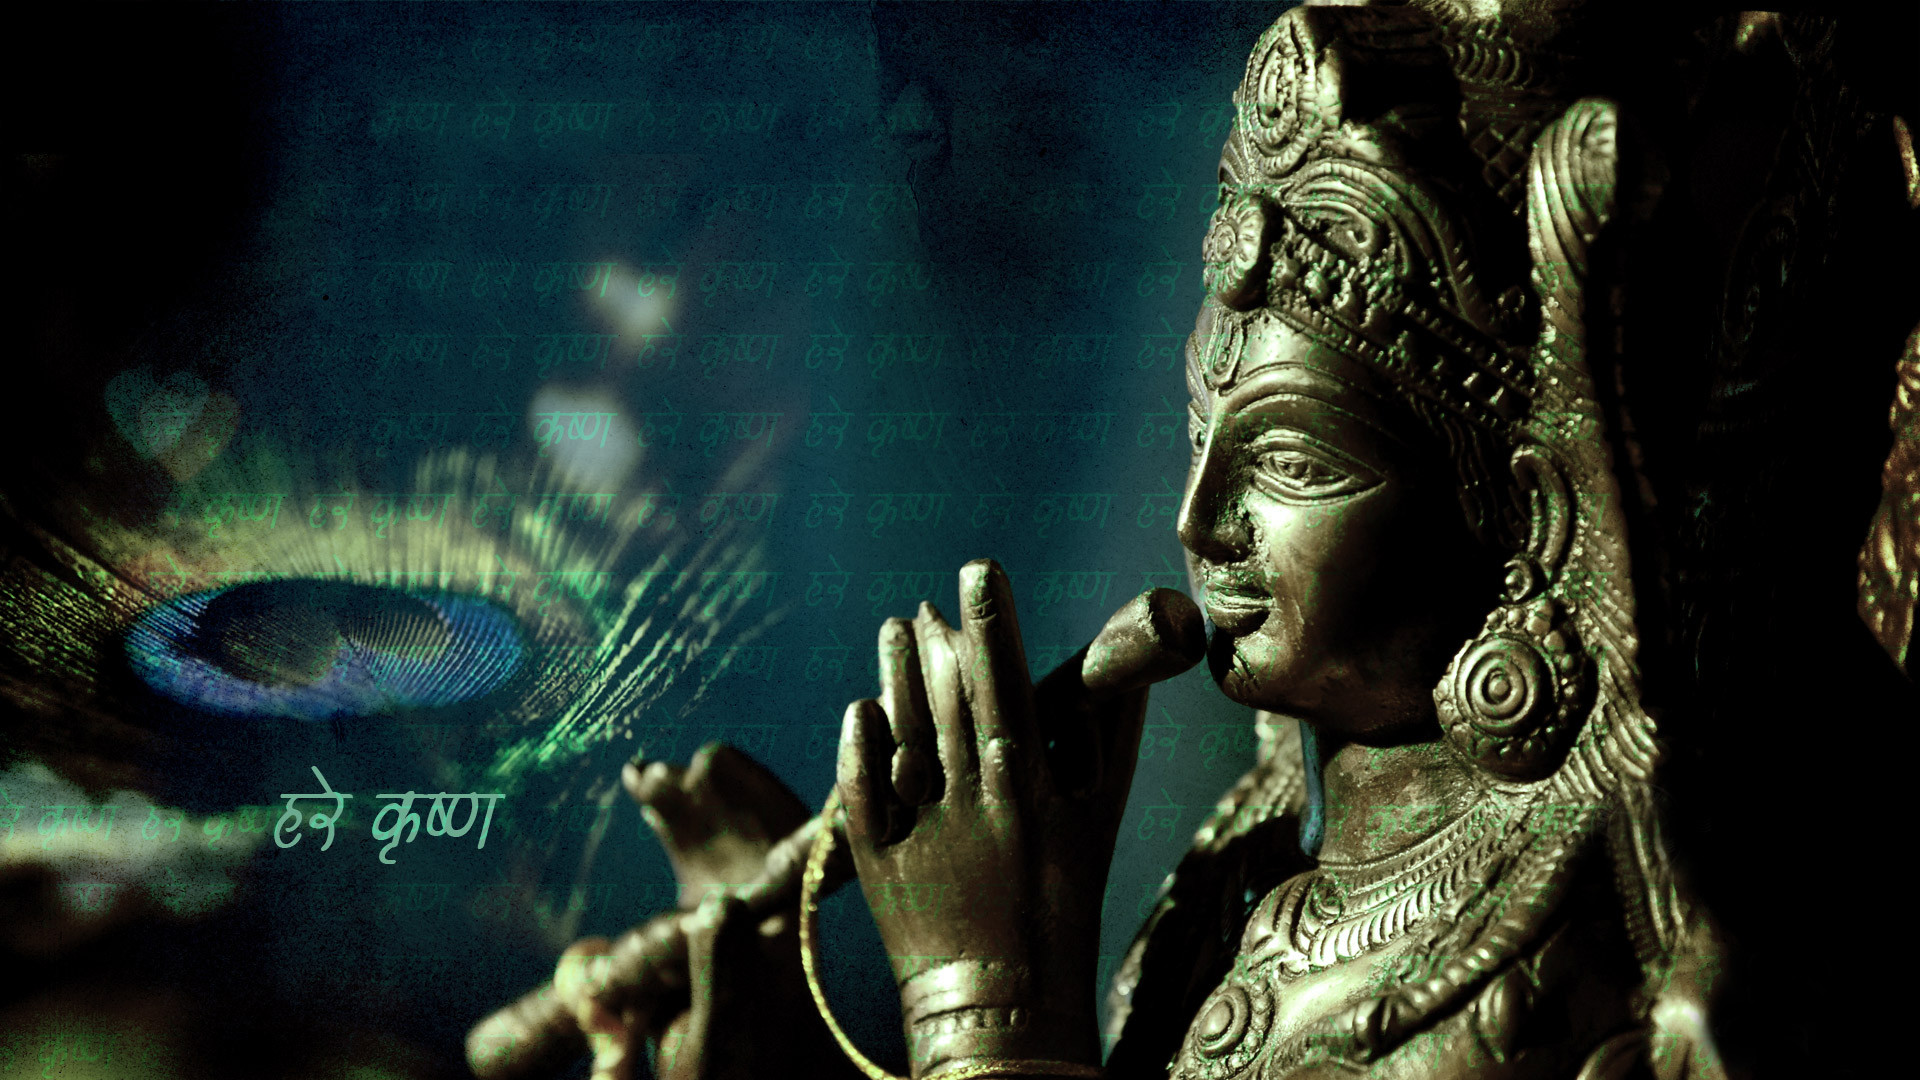 1920x1080 Best 25+ Happy janmashtami image ideas on Pinterest | Janmashtami quotes,  Krishna and Photos of lord krishna